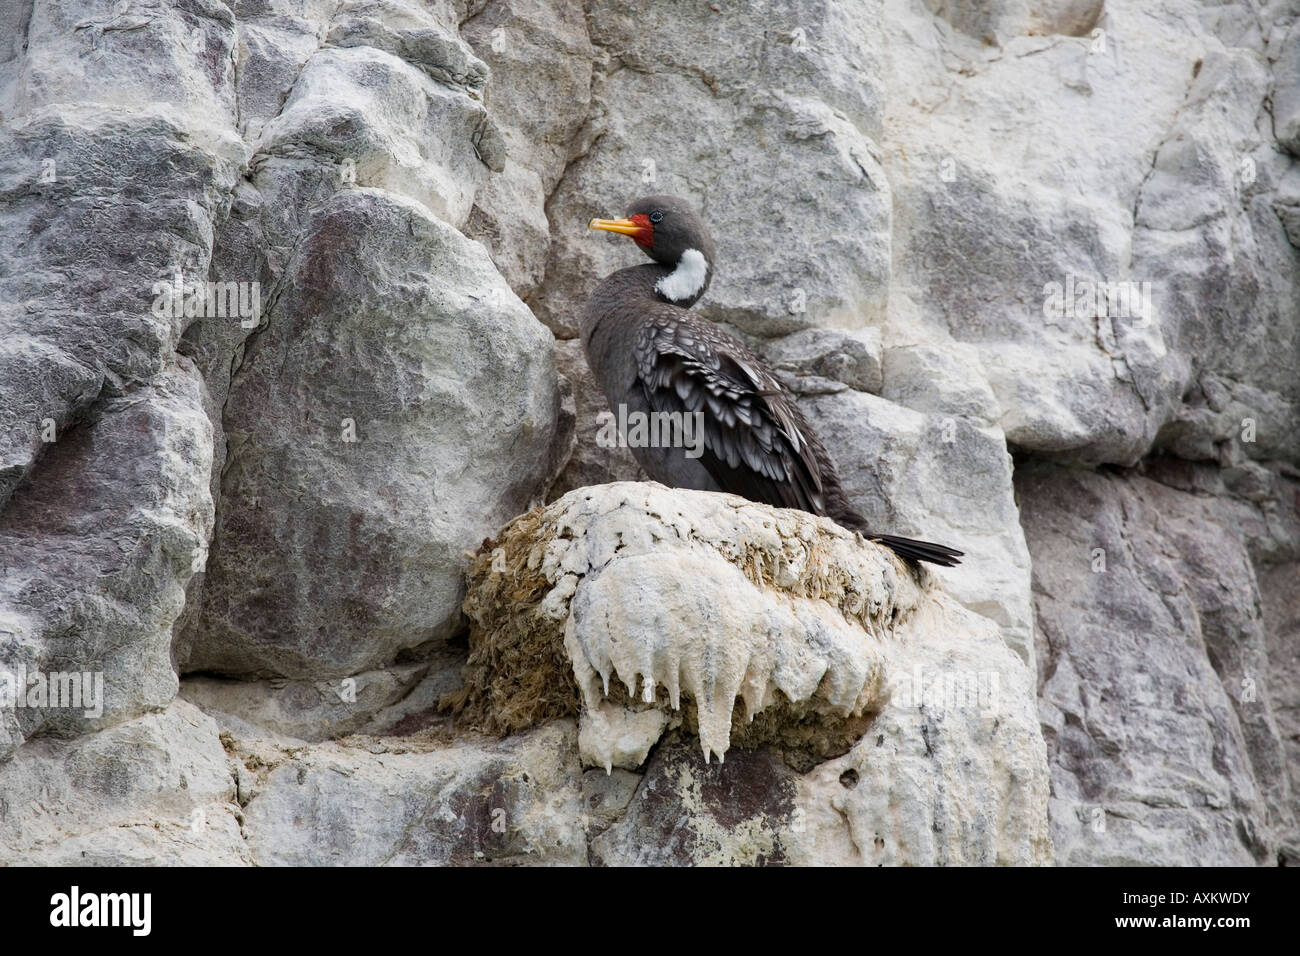 Buntscharbe Cormoran Gris Red legged cormorant Phalacrocorax gaimardi Stock Photo